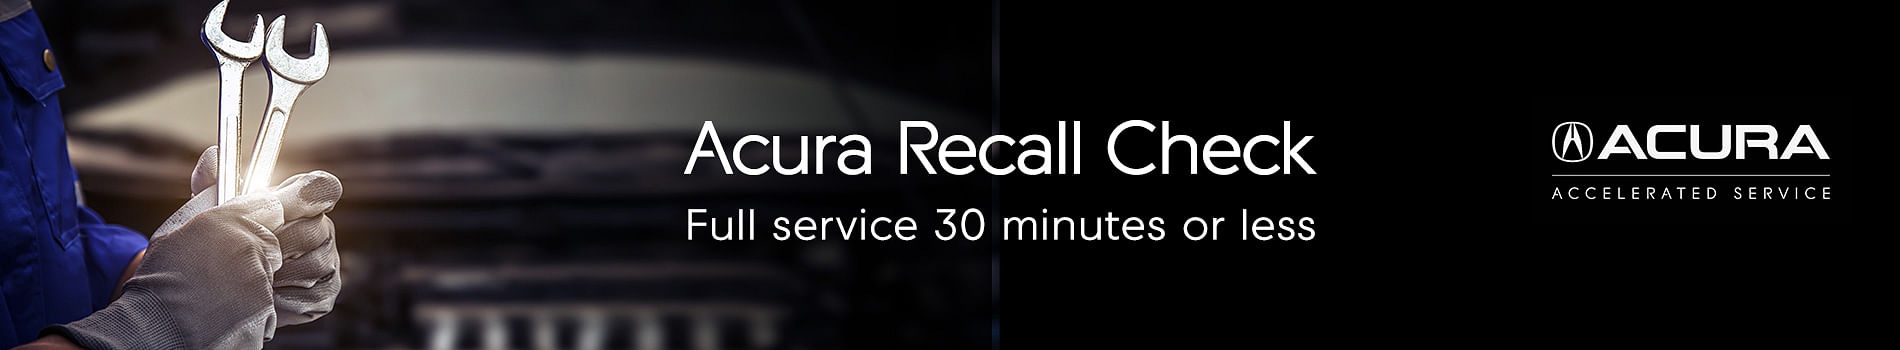 Acura Recall Check Banner